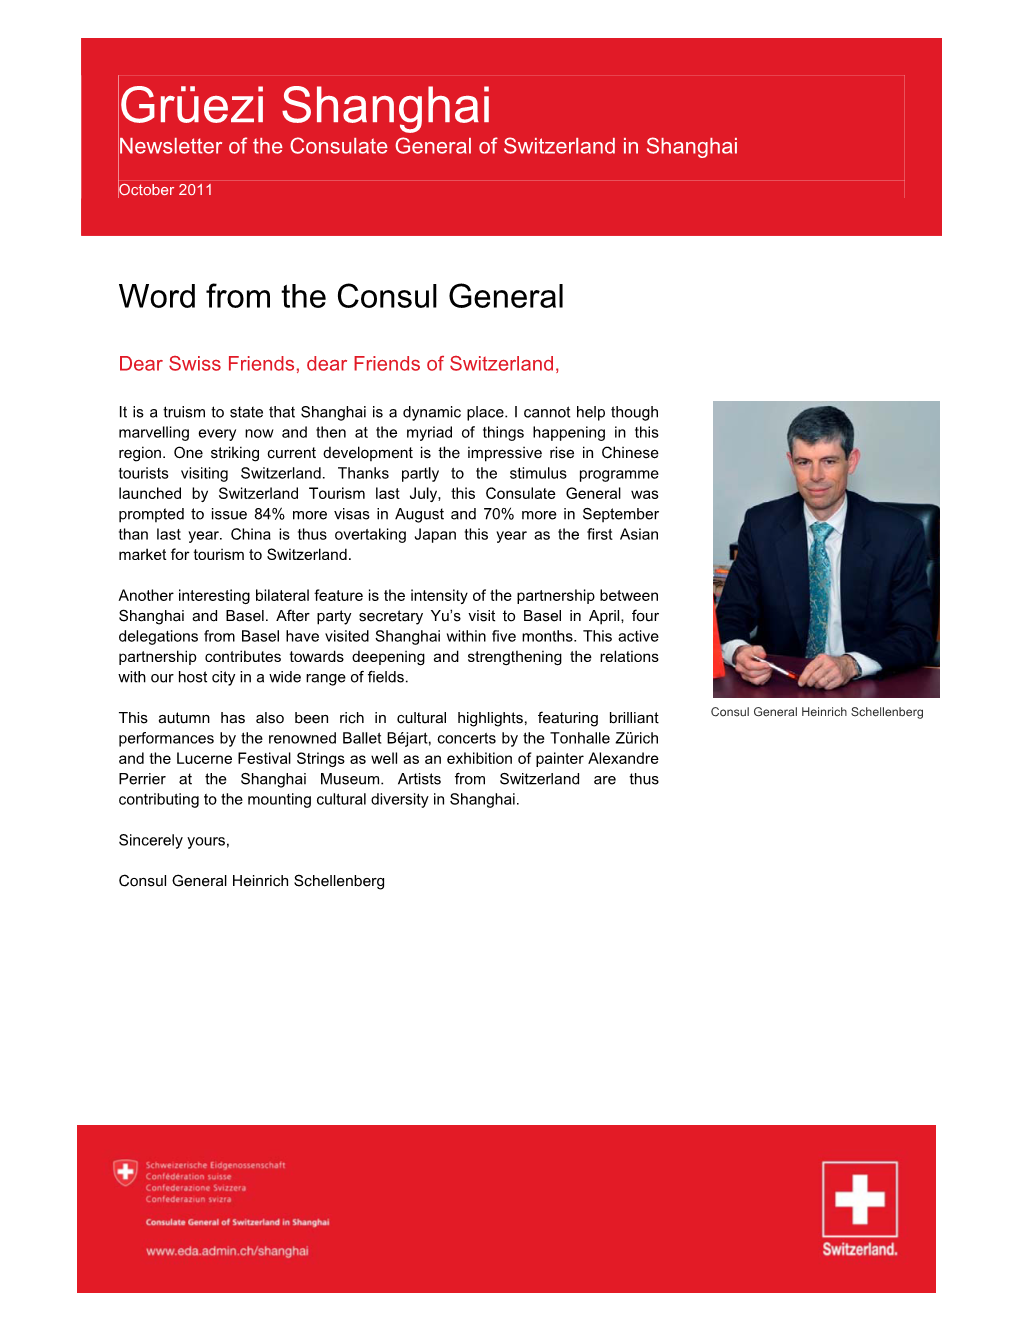 Grüezi Shanghai Newsletter of the Consulate General of Switzerland in Shanghai